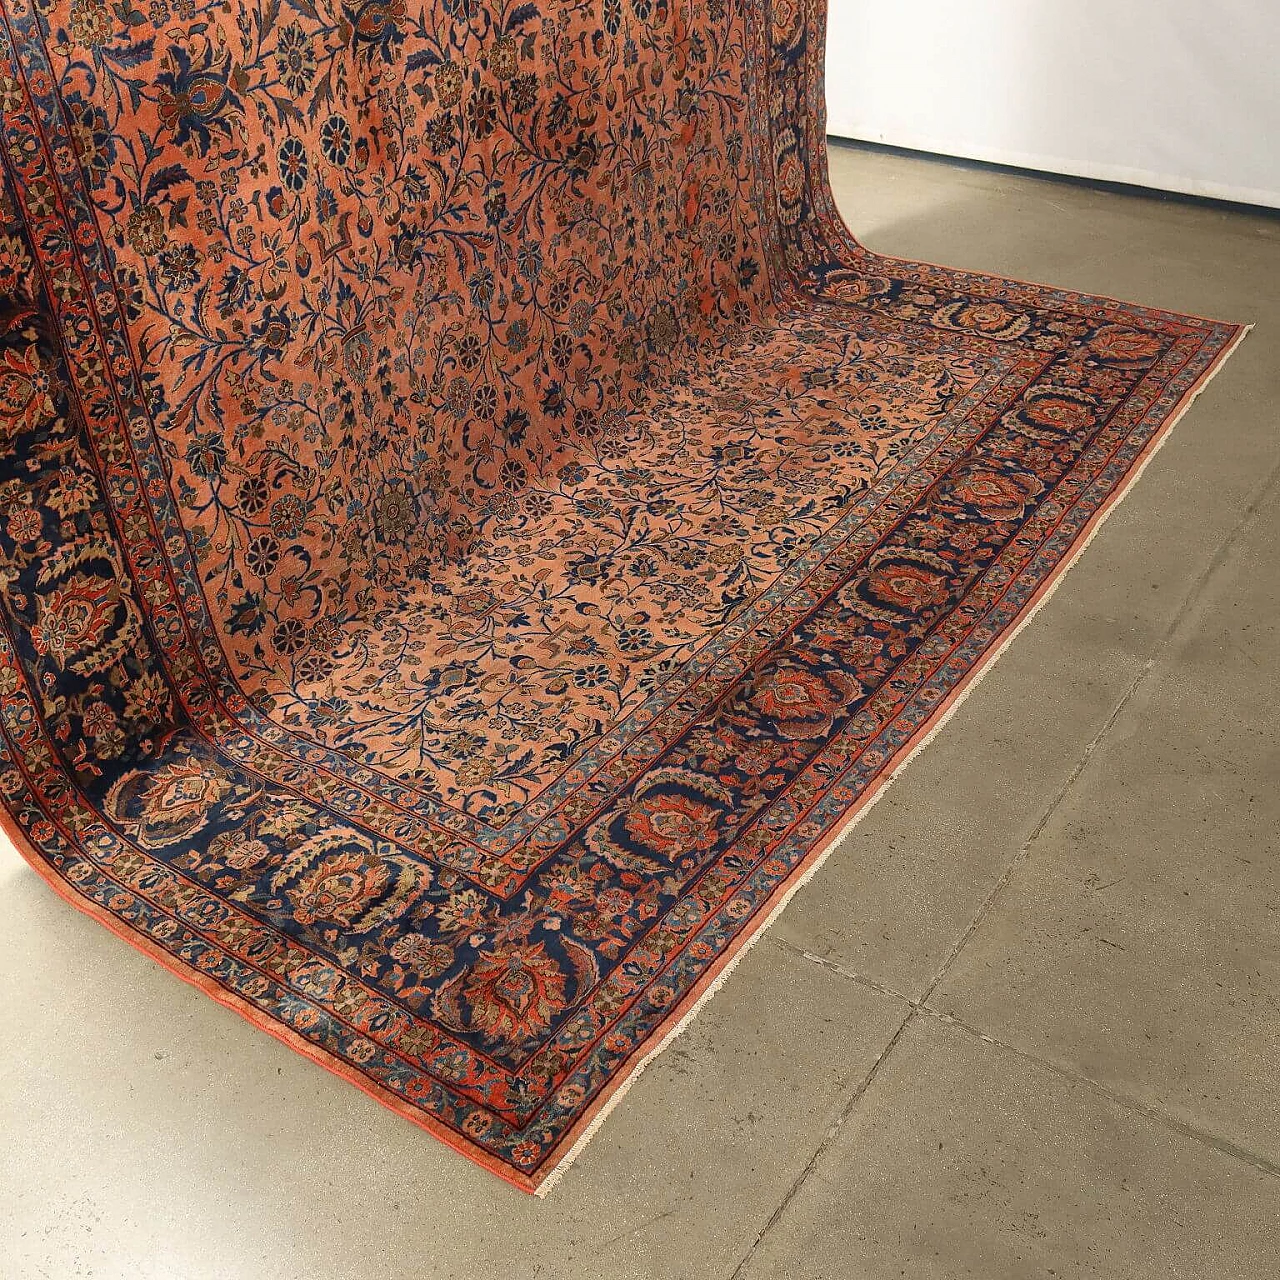 Iranian Keshan Manchester cotton and wool carpet 8